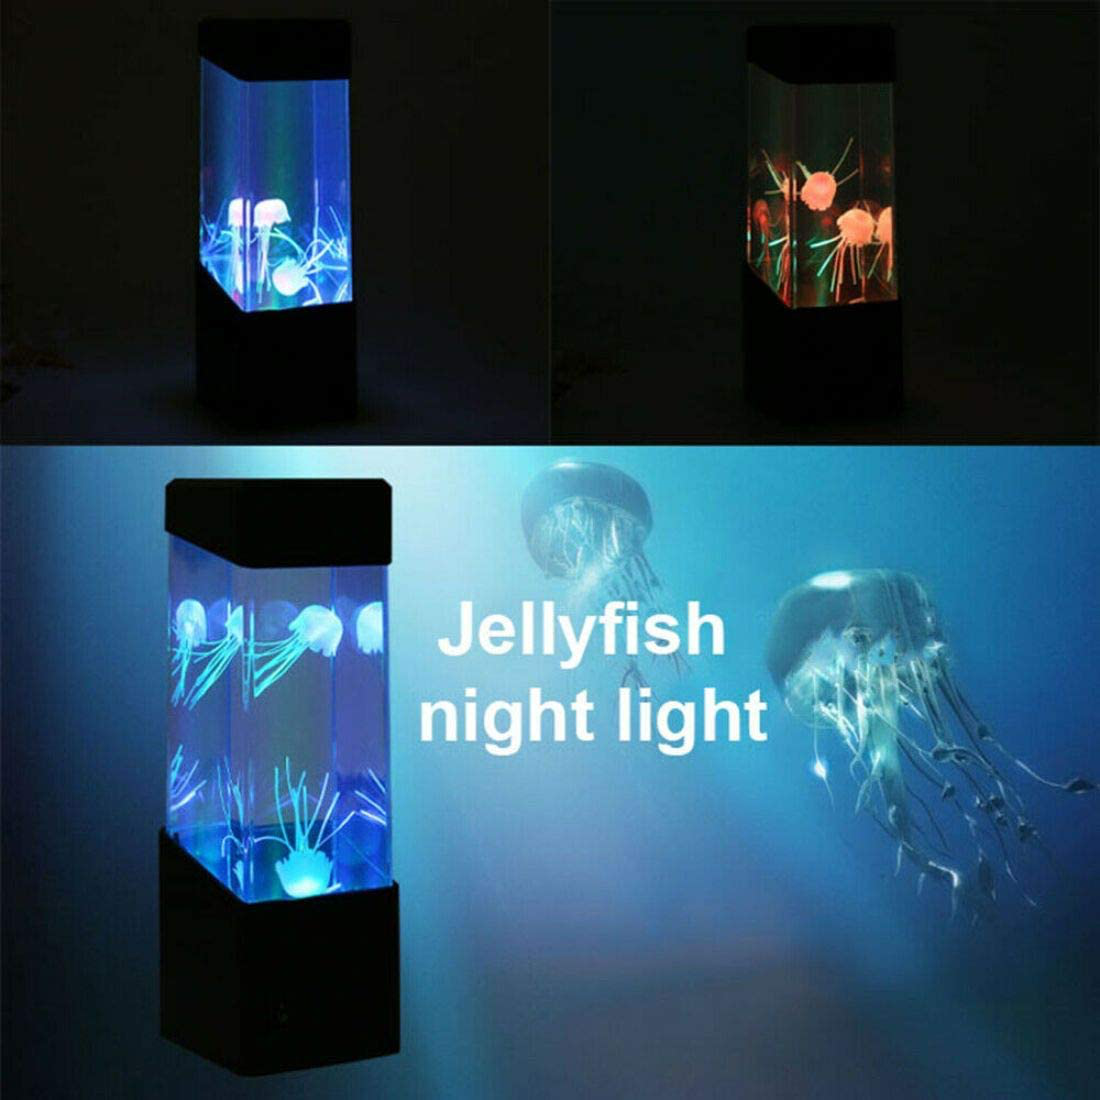 Mayfair Jellyfish Ocean Mood Led Light Lamp Motion Night Lighting Effects Lamp Color Changing for Aquarium Tank Living Room Bedside Table Office Desk Desktop Home Decor Perfect Modern Design Gift Item